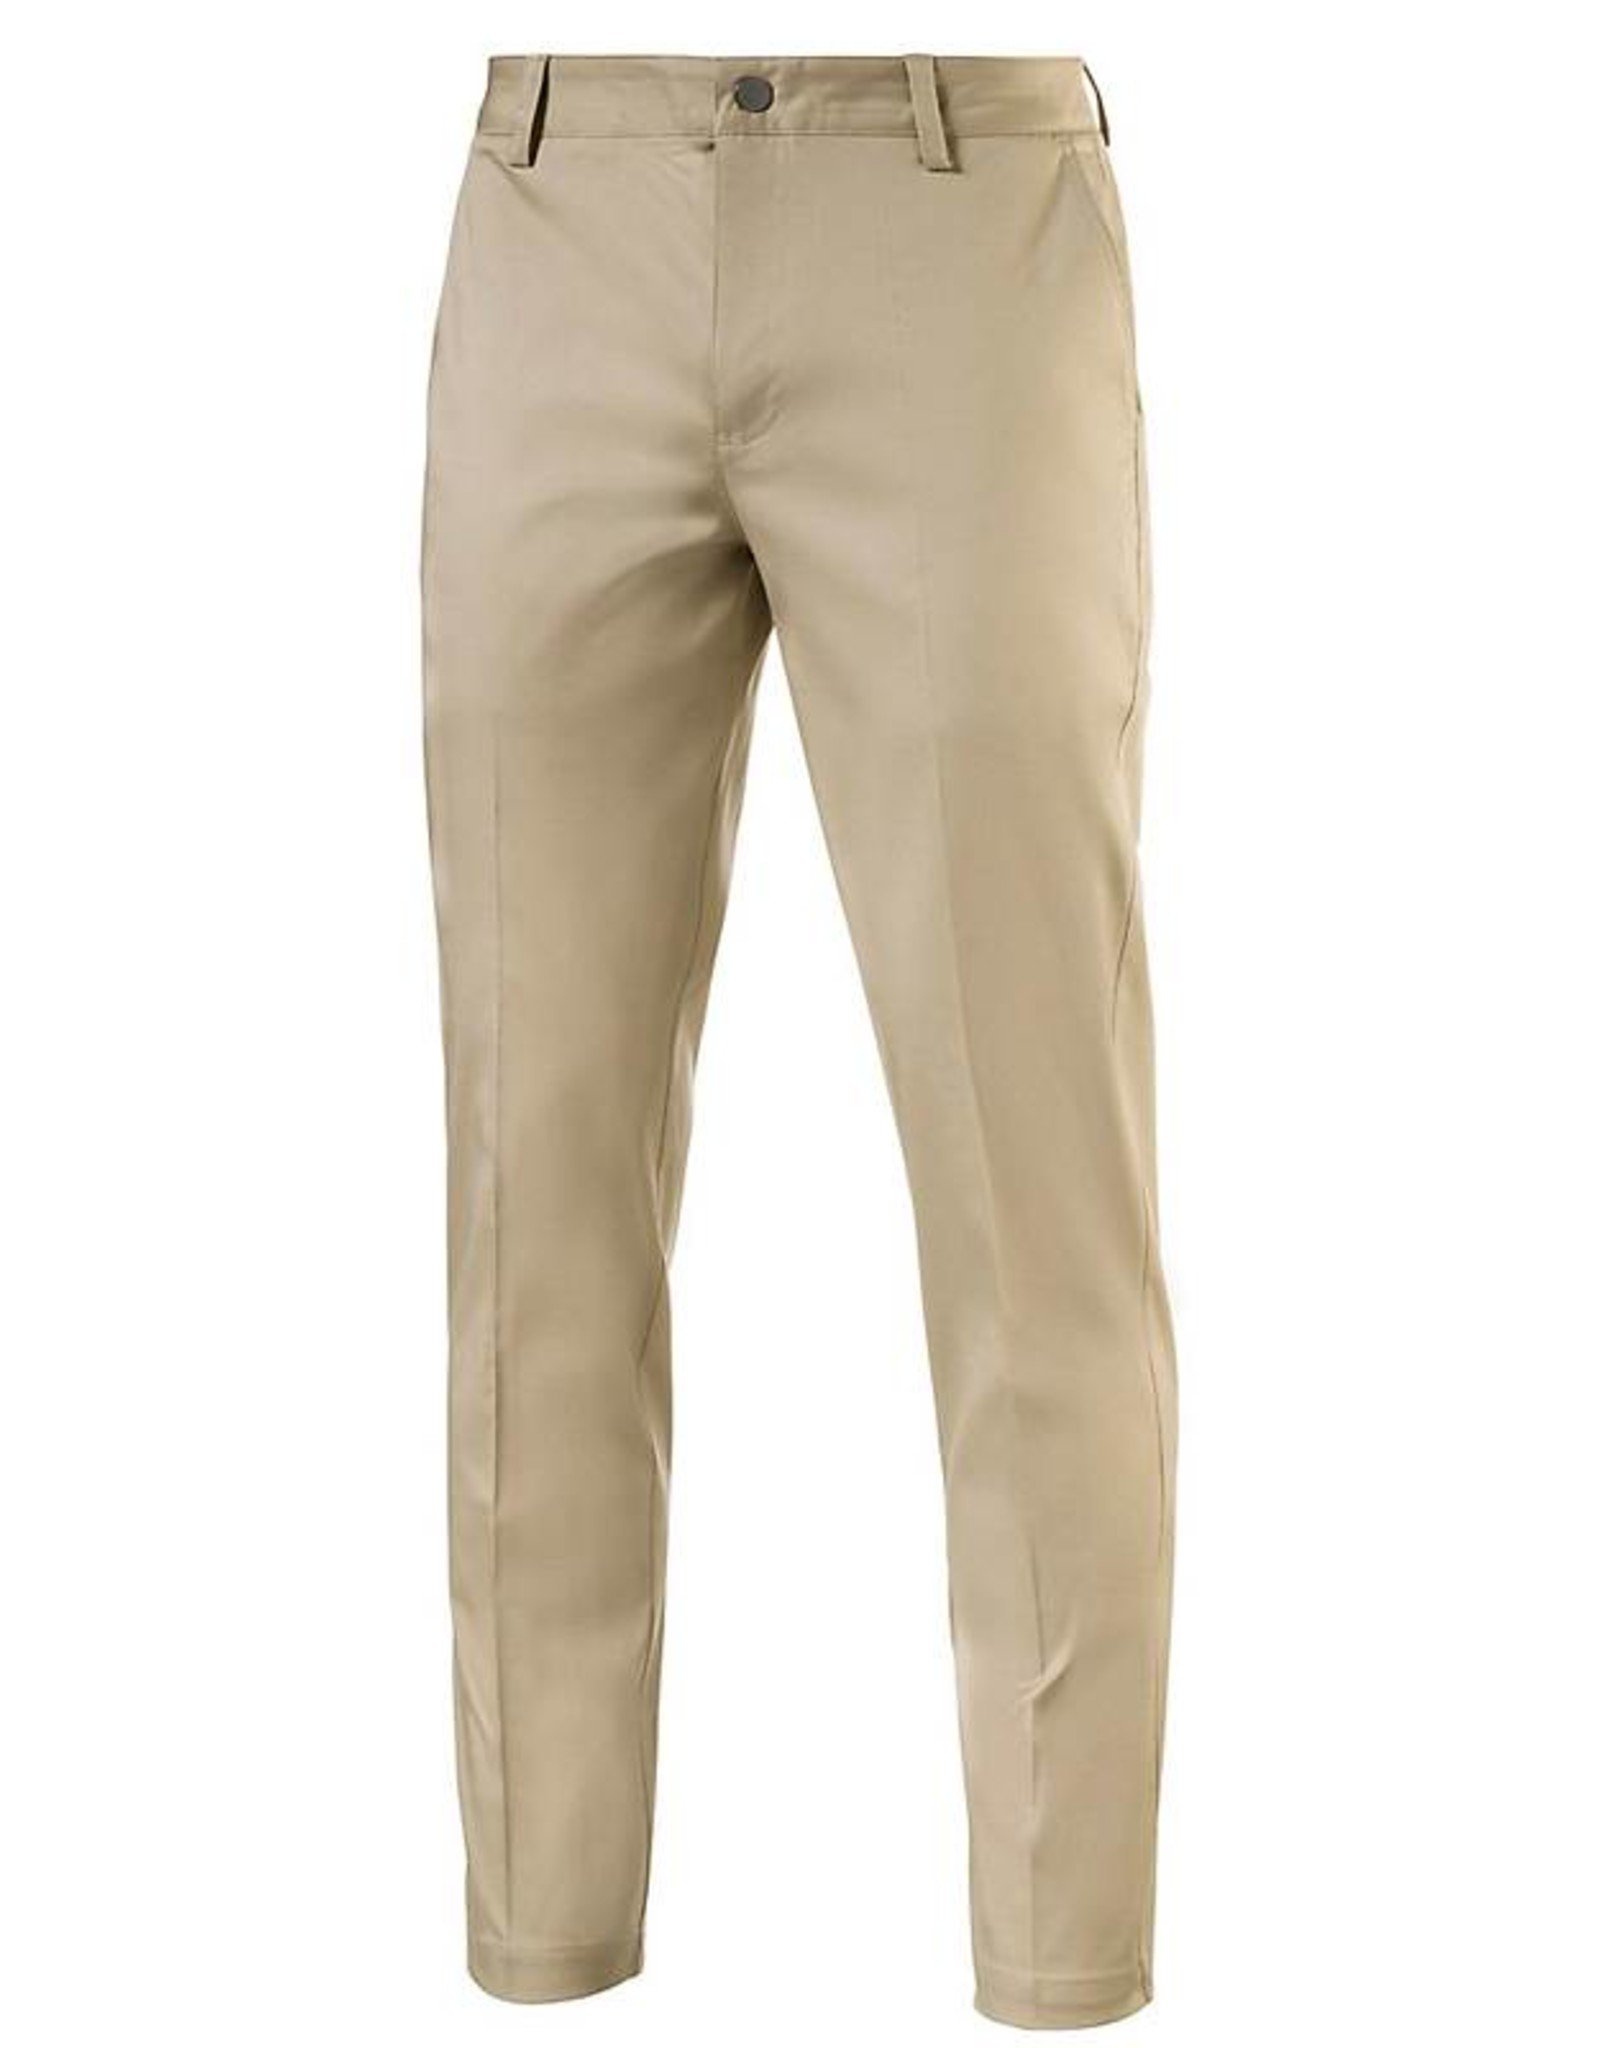 puma golf men's tailored chino pants